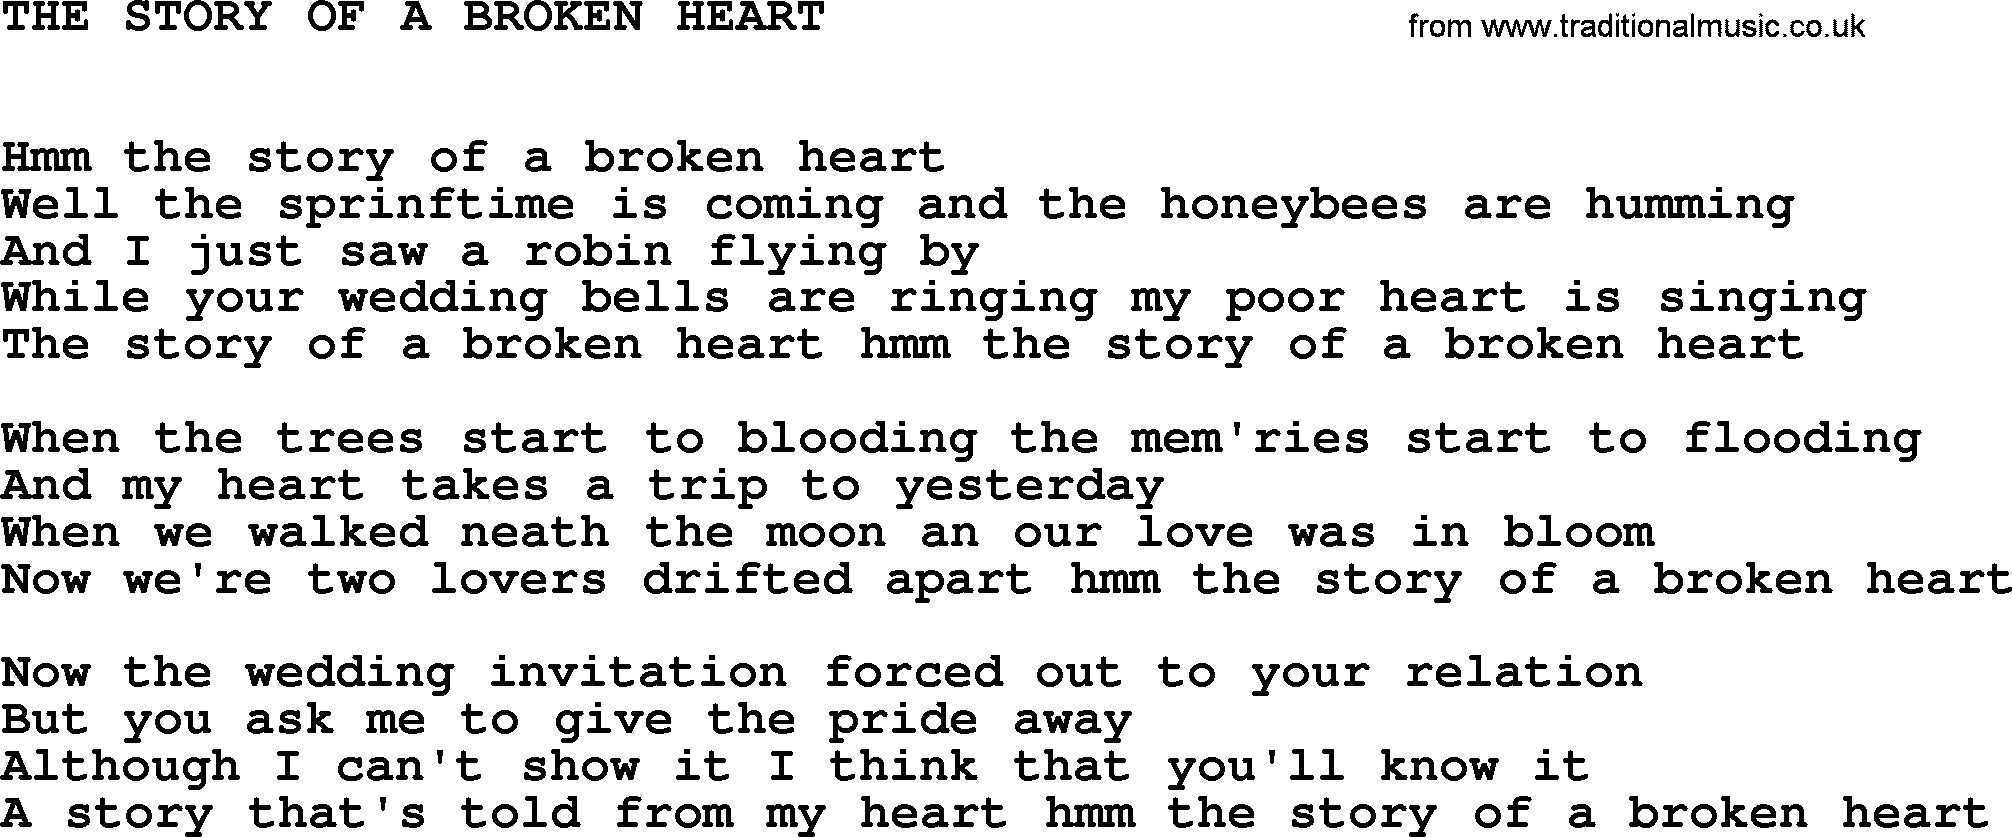 Johnny Cash song The Story Of A Broken Heart.txt lyrics